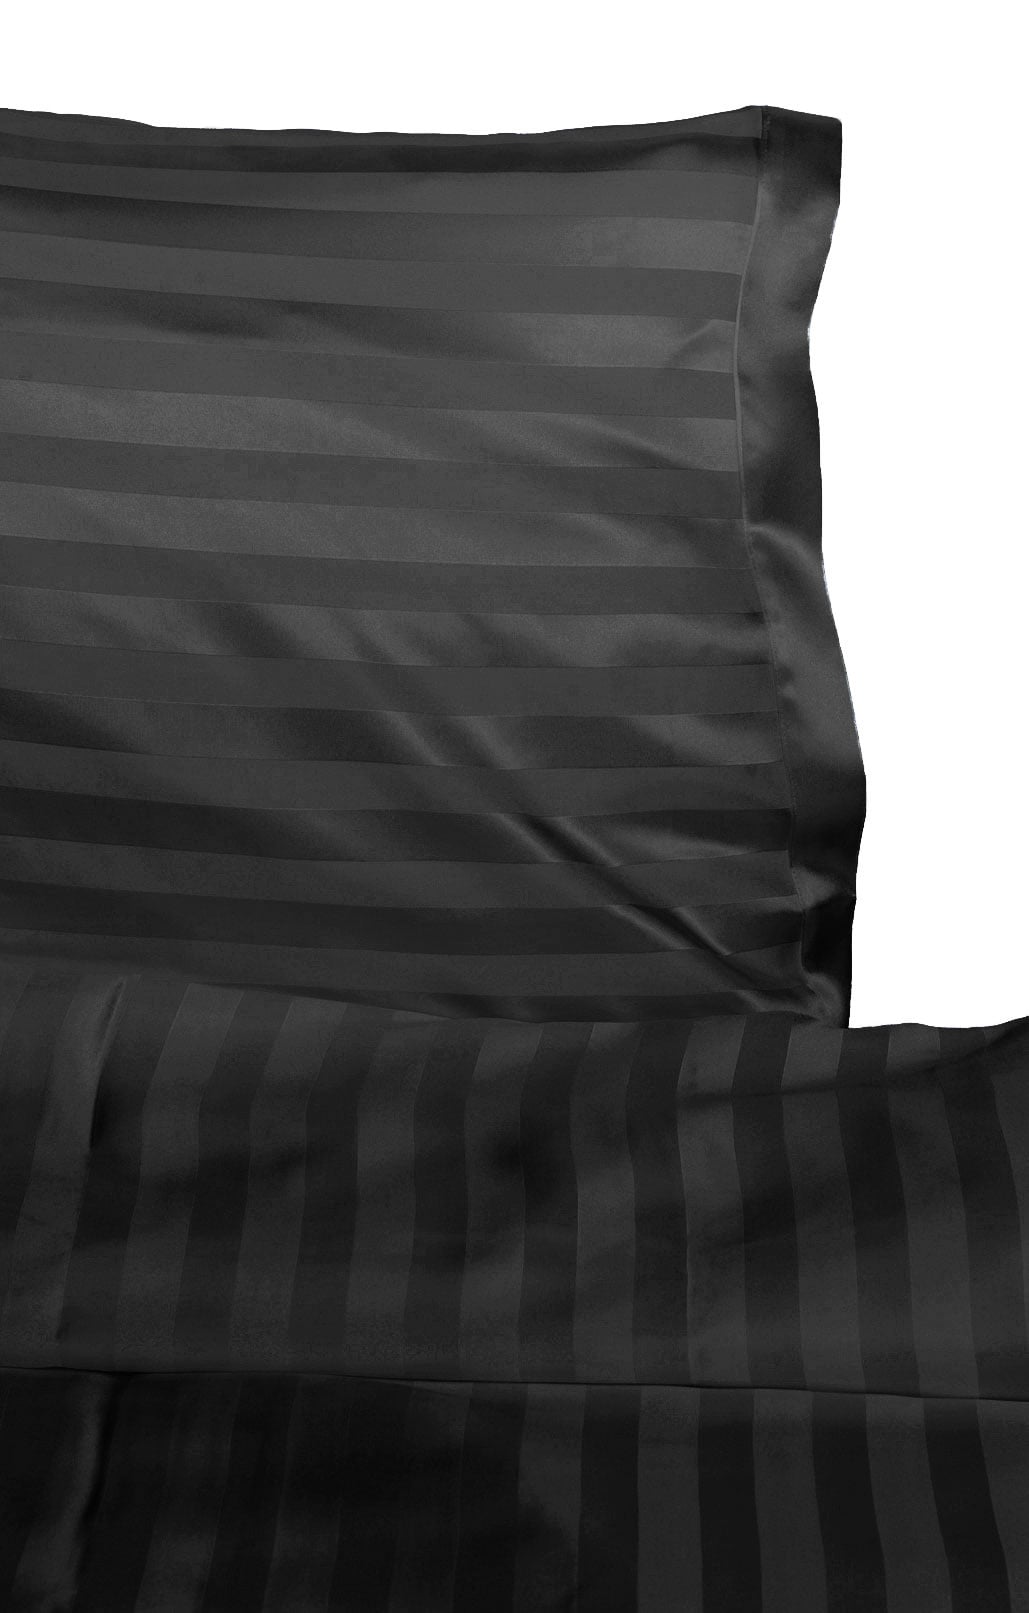 Silk Duvet Cover With Pillow Case Satin Stripe Black